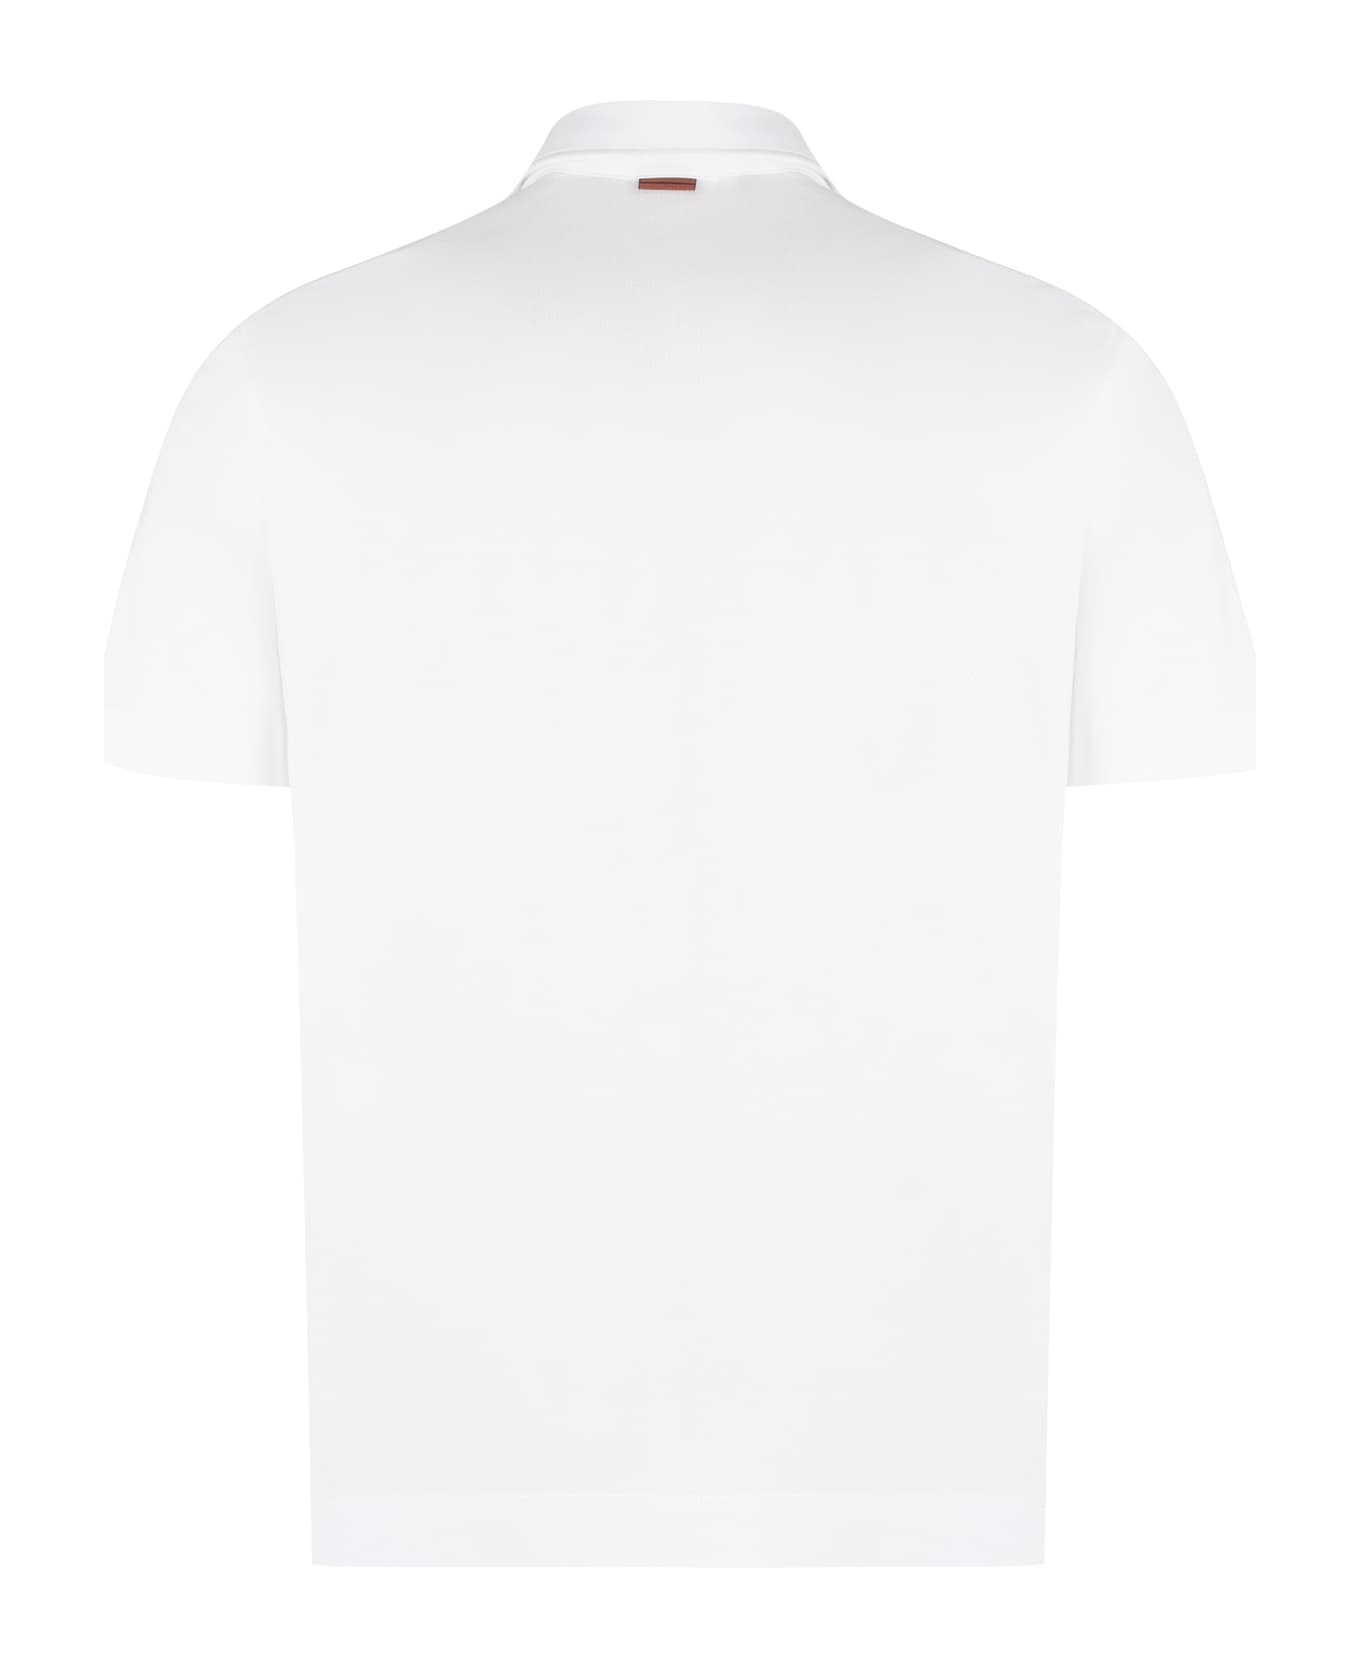 Zegna Short Sleeve Cotton Pique Polo Shirt - White ポロシャツ